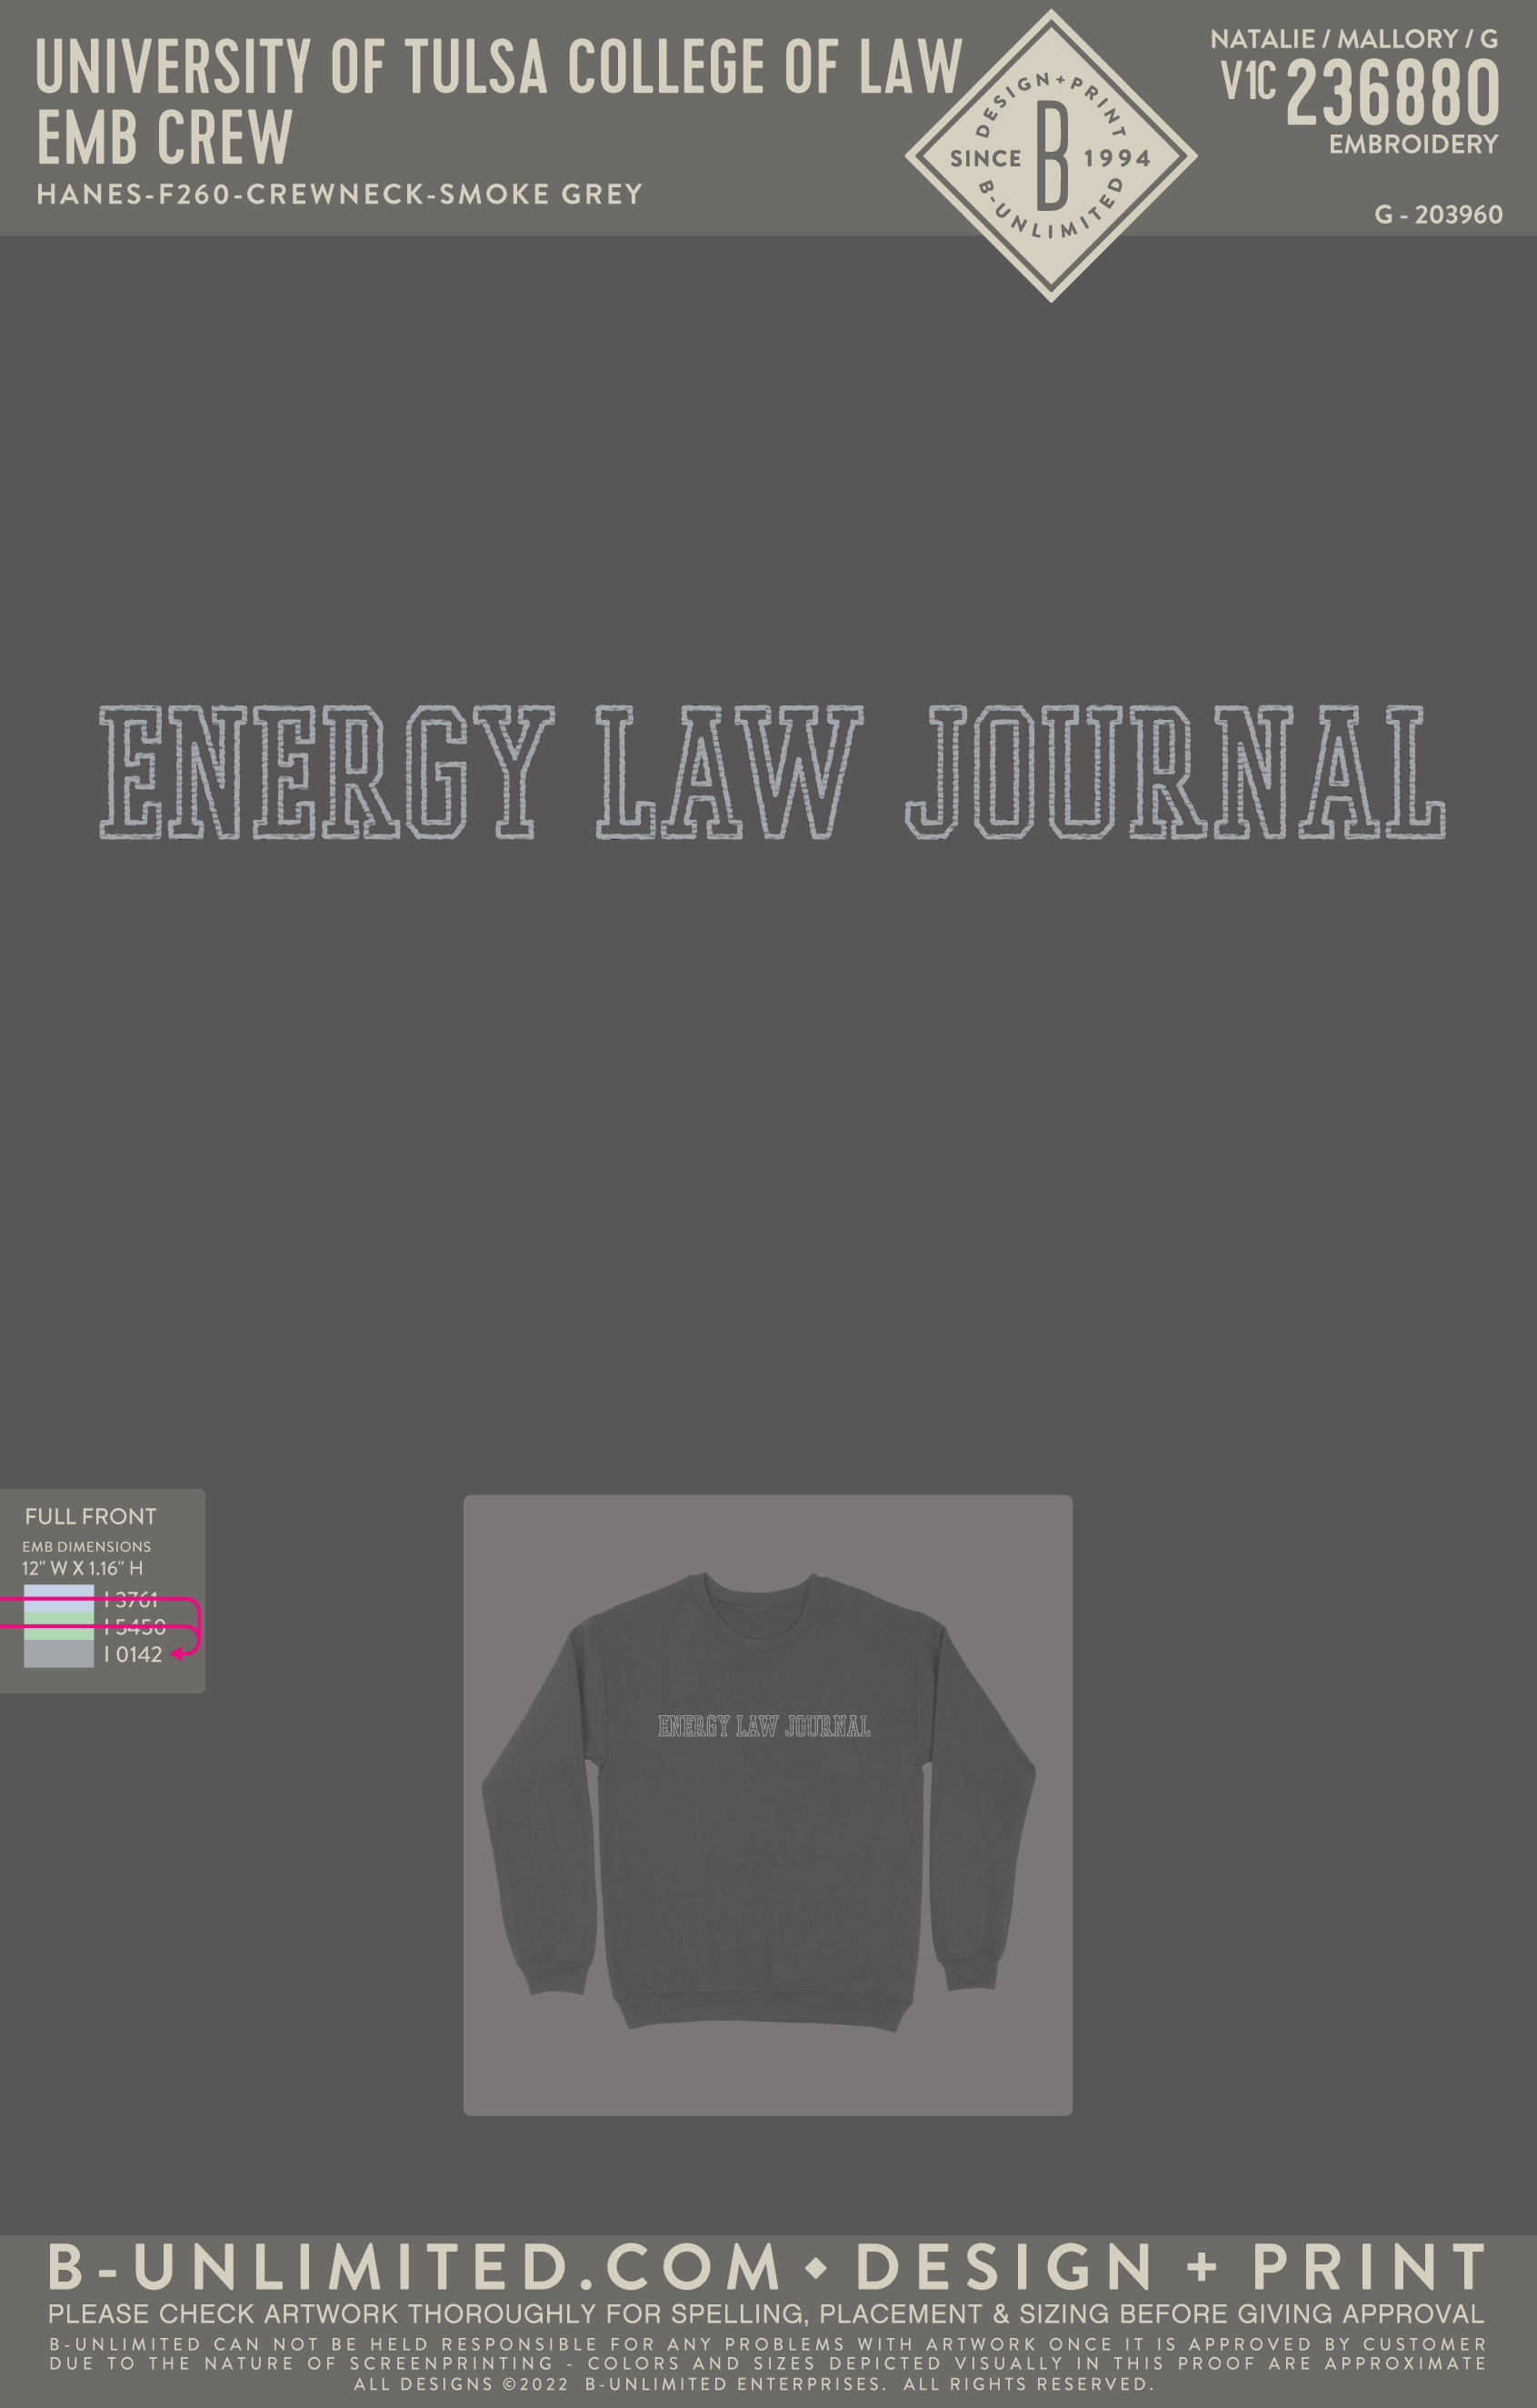 University of Tulsa College of Law - Emb Crew - Hanes - F260 - Sweatshirt - Smoke Grey